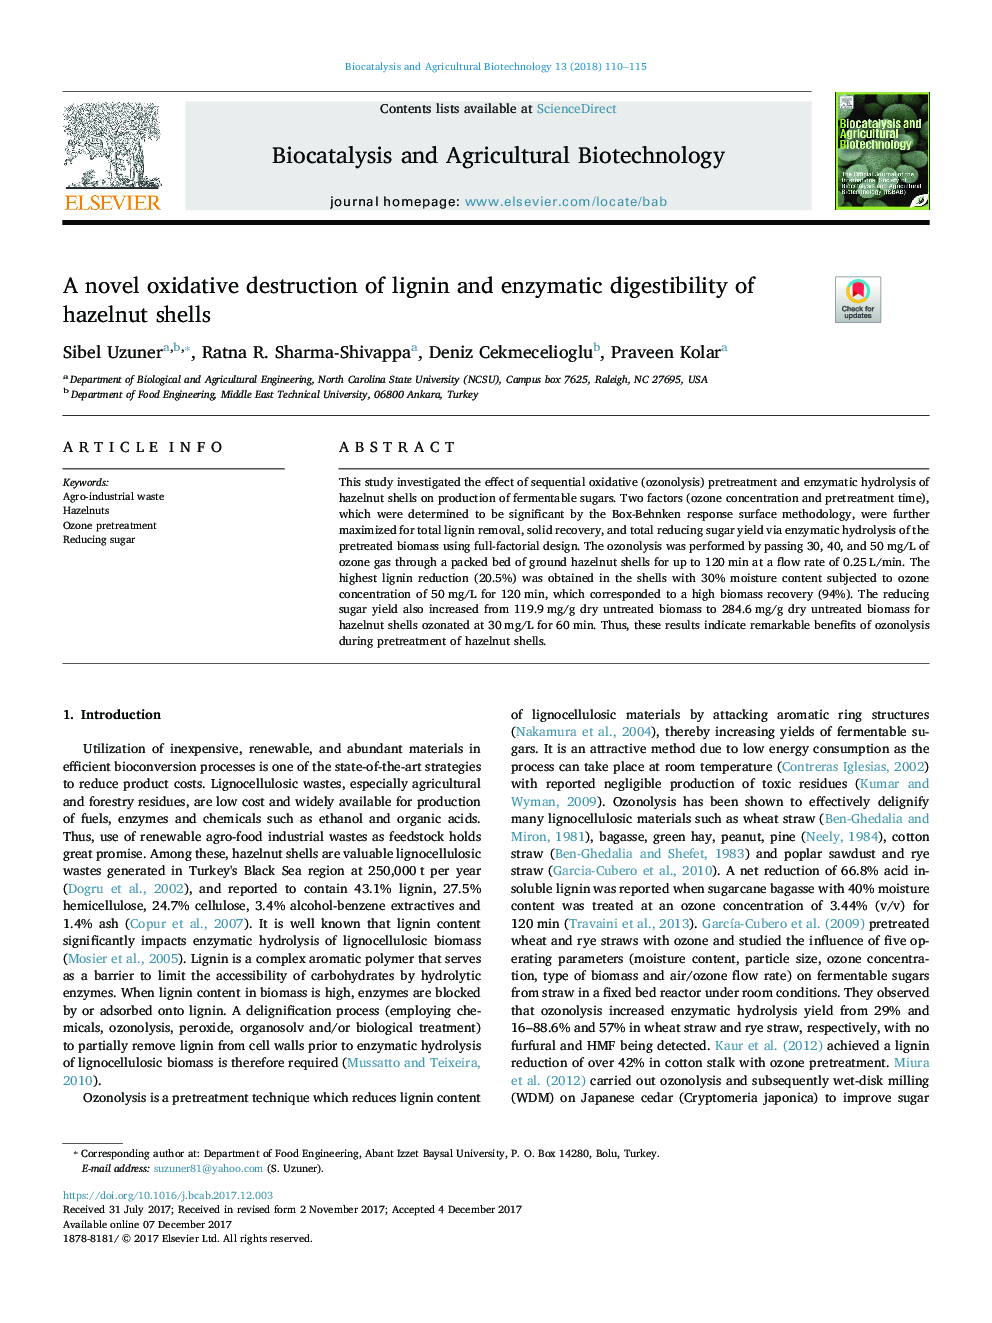 A novel oxidative destruction of lignin and enzymatic digestibility of hazelnut shells